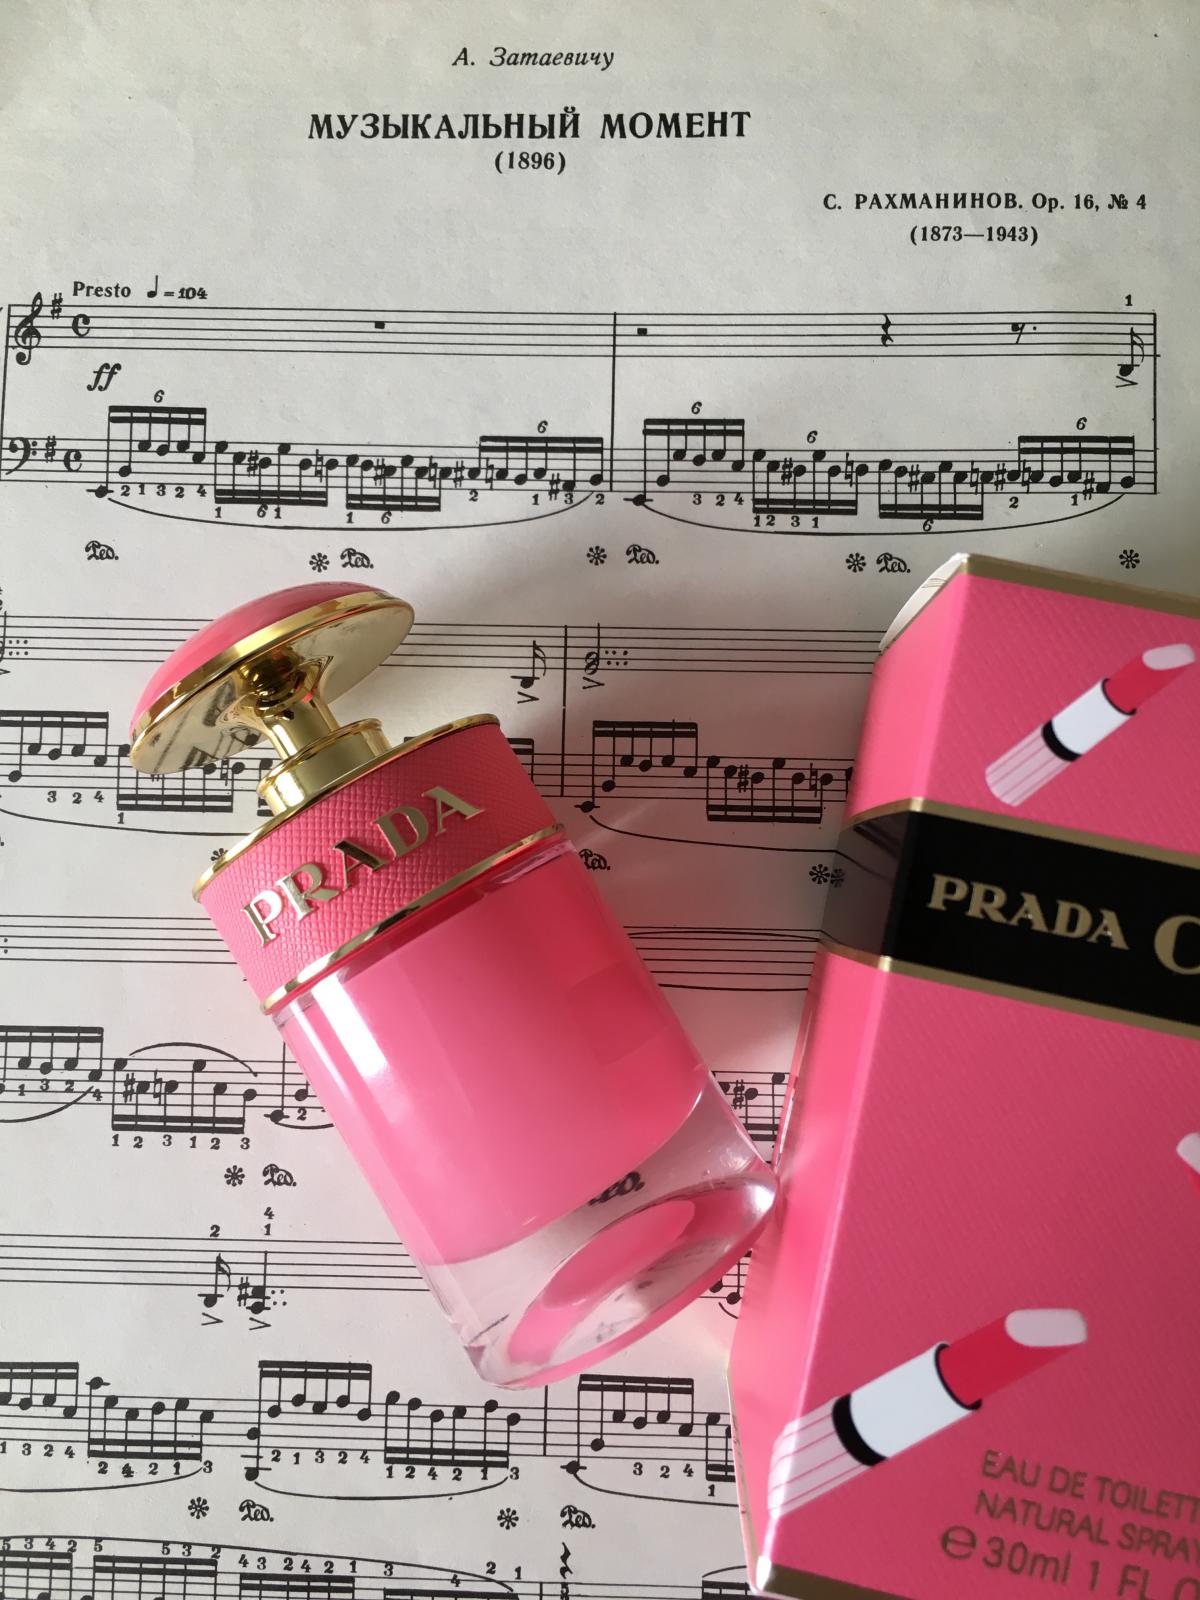 Prada Candy Gloss Prada perfume - a fragrance for women 2017